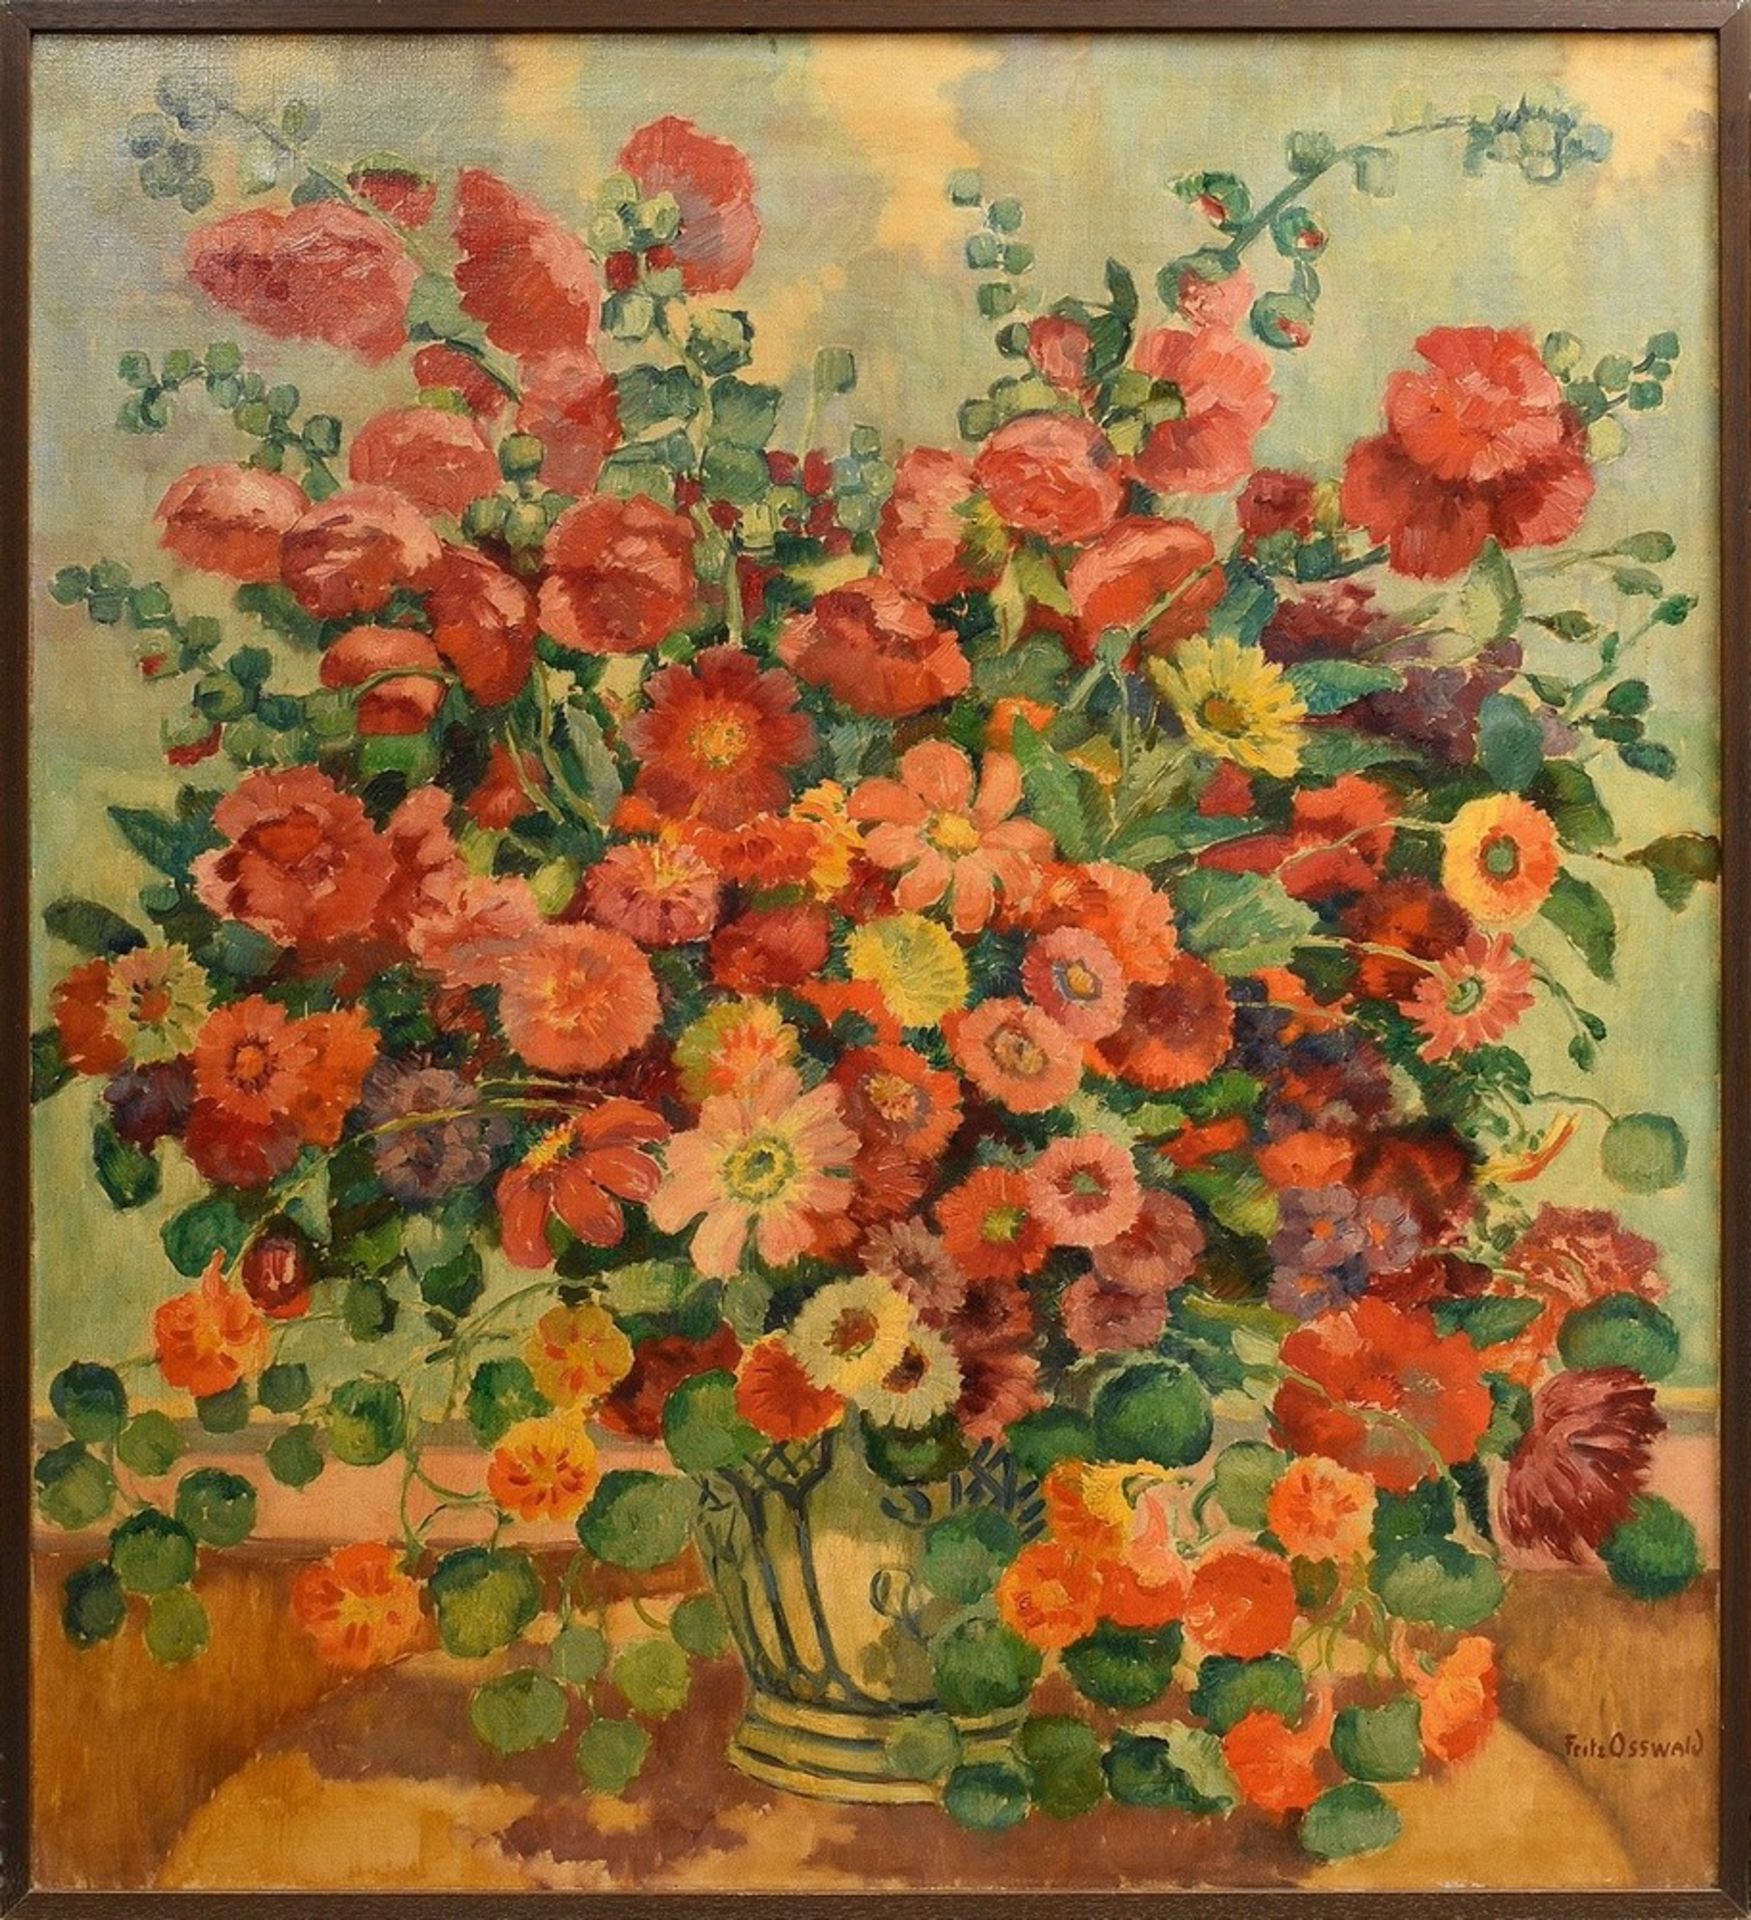 Osswald, Fritz (1878-1966) "Flower still life with stoneware jug", oil/canvas, sign. b.r., 111x101c